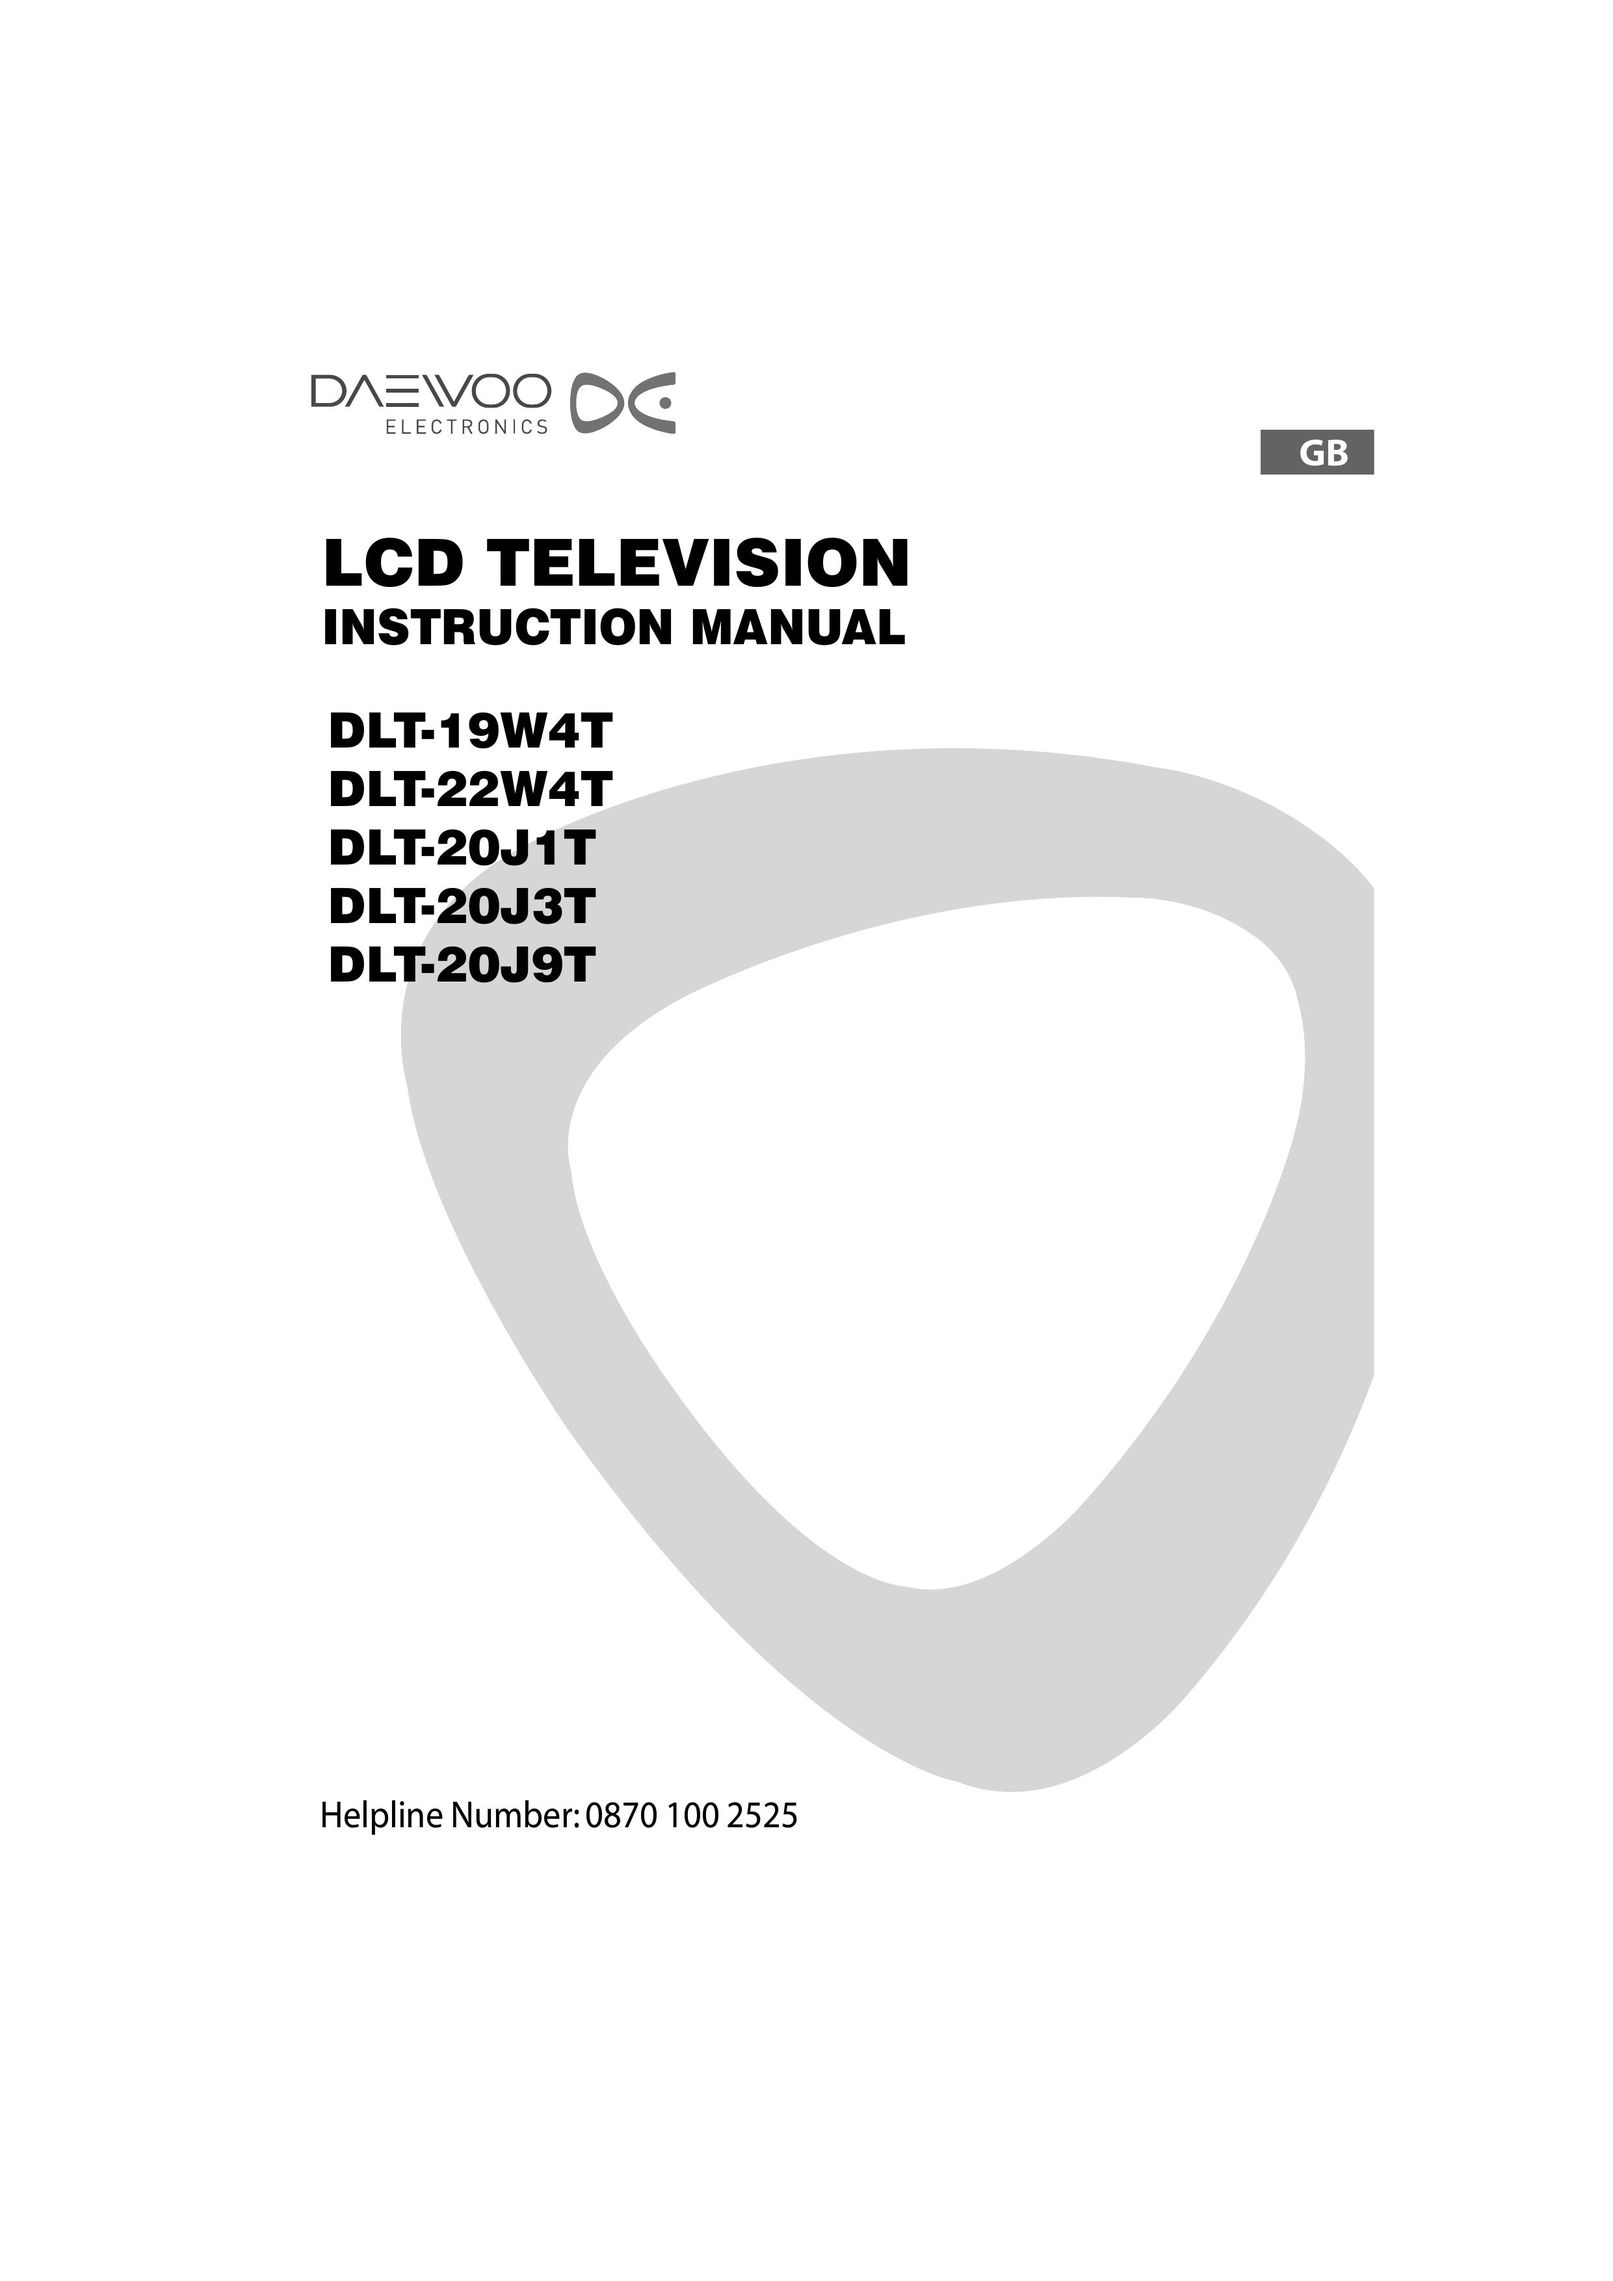 Daewoo DLT-20J3T Flat Panel Television User Manual